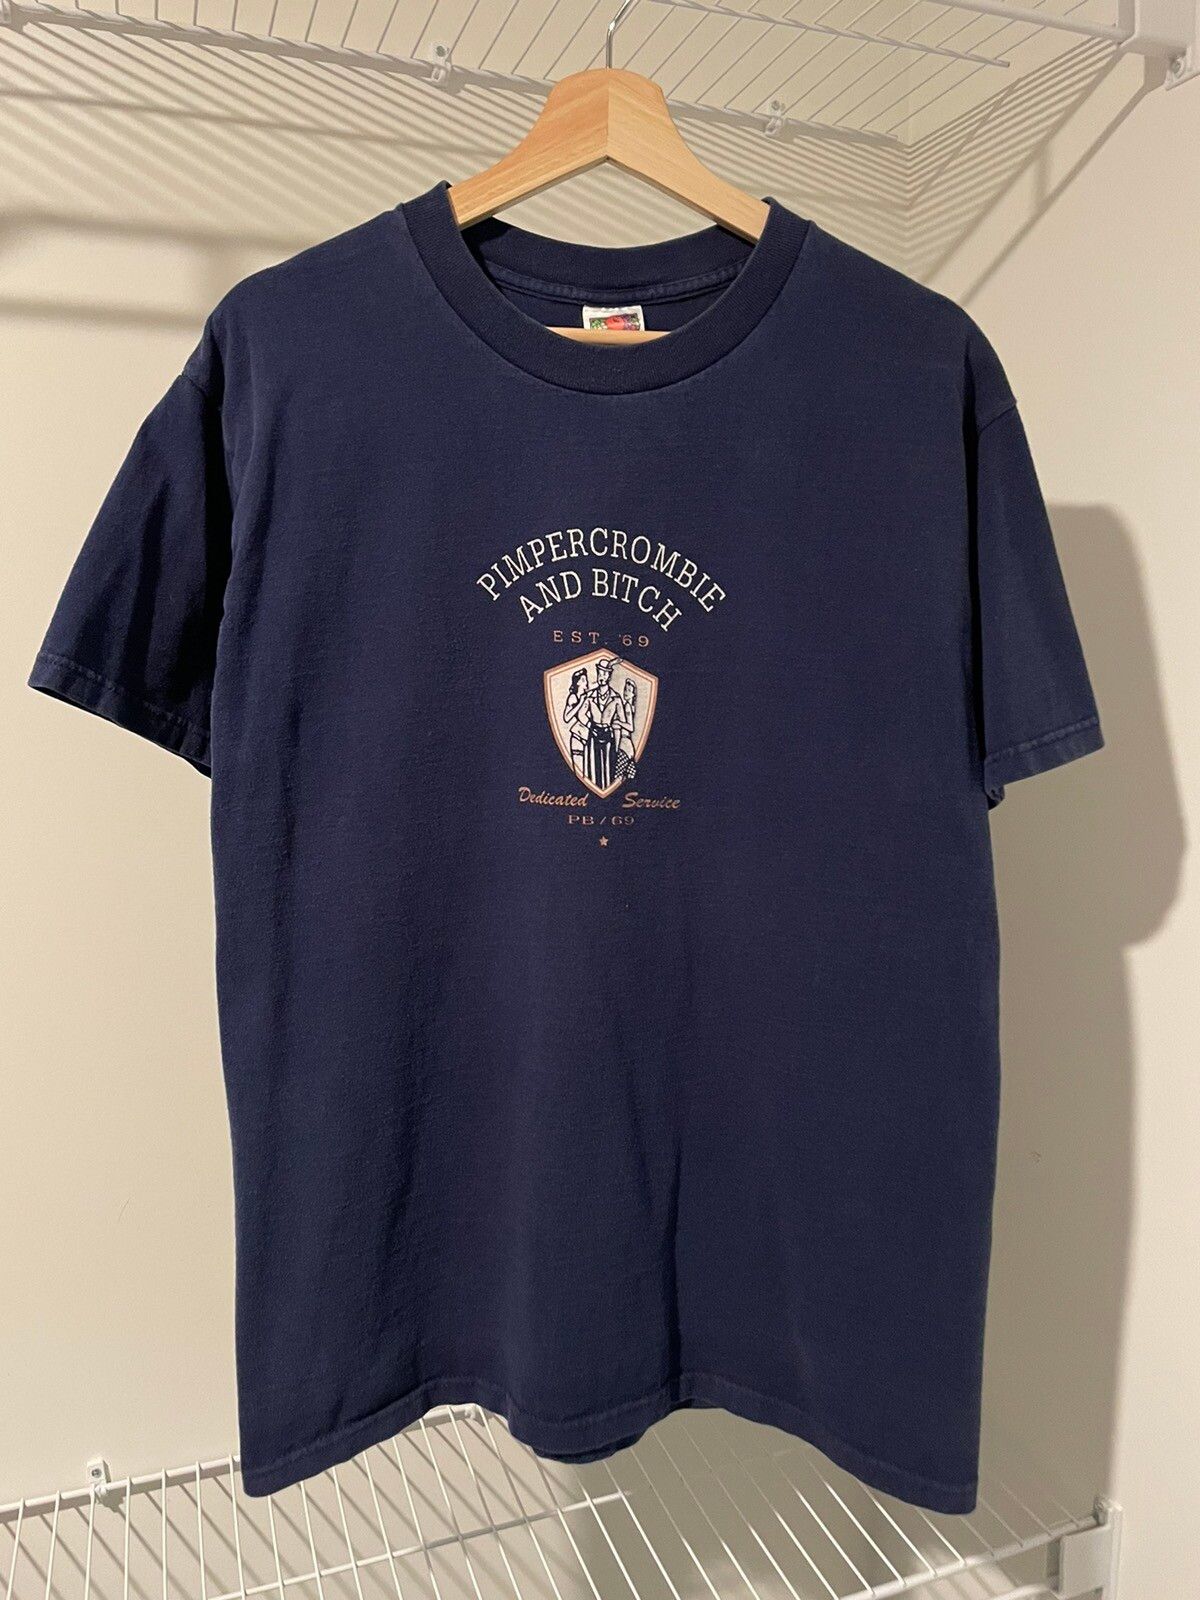 Vintage Vintage Pimpercrombie And Bitch T-Shirt | Grailed